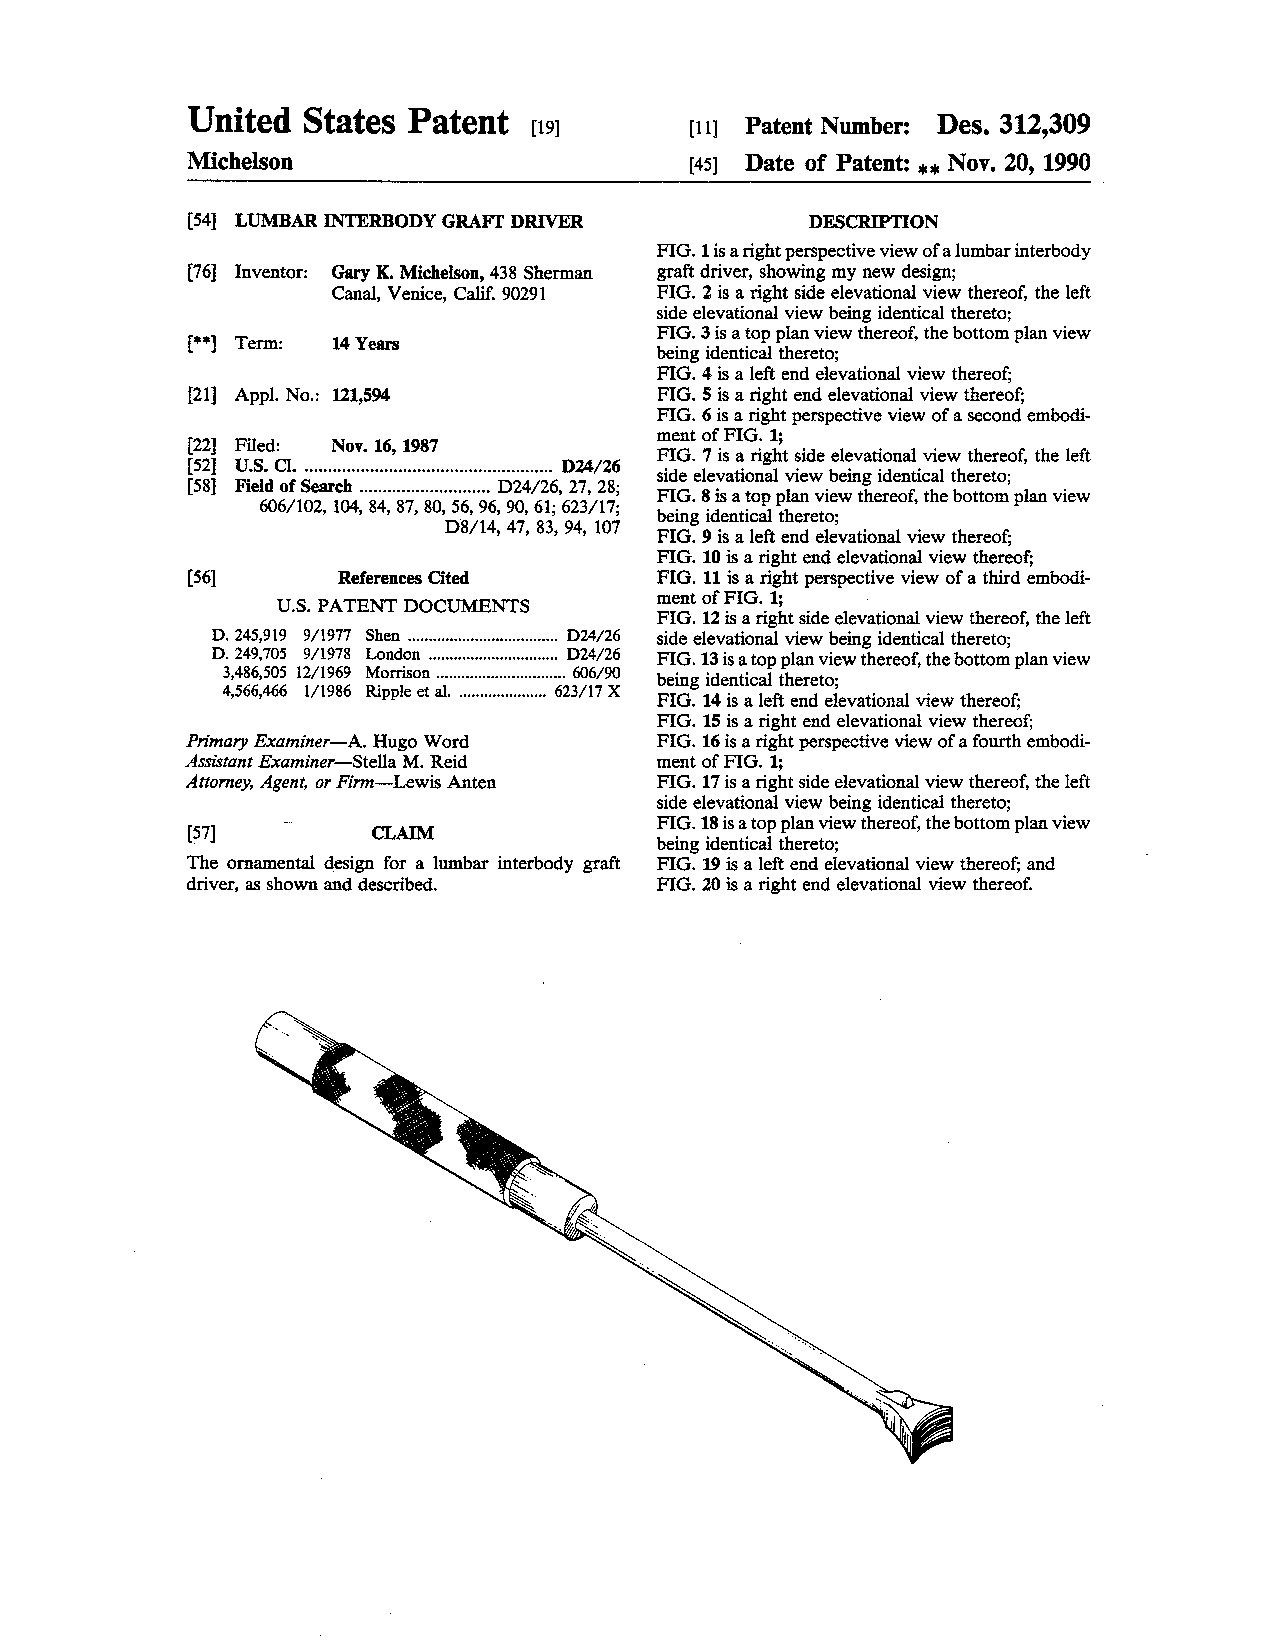 Lumbar interbody graft driver - Patent D312,309